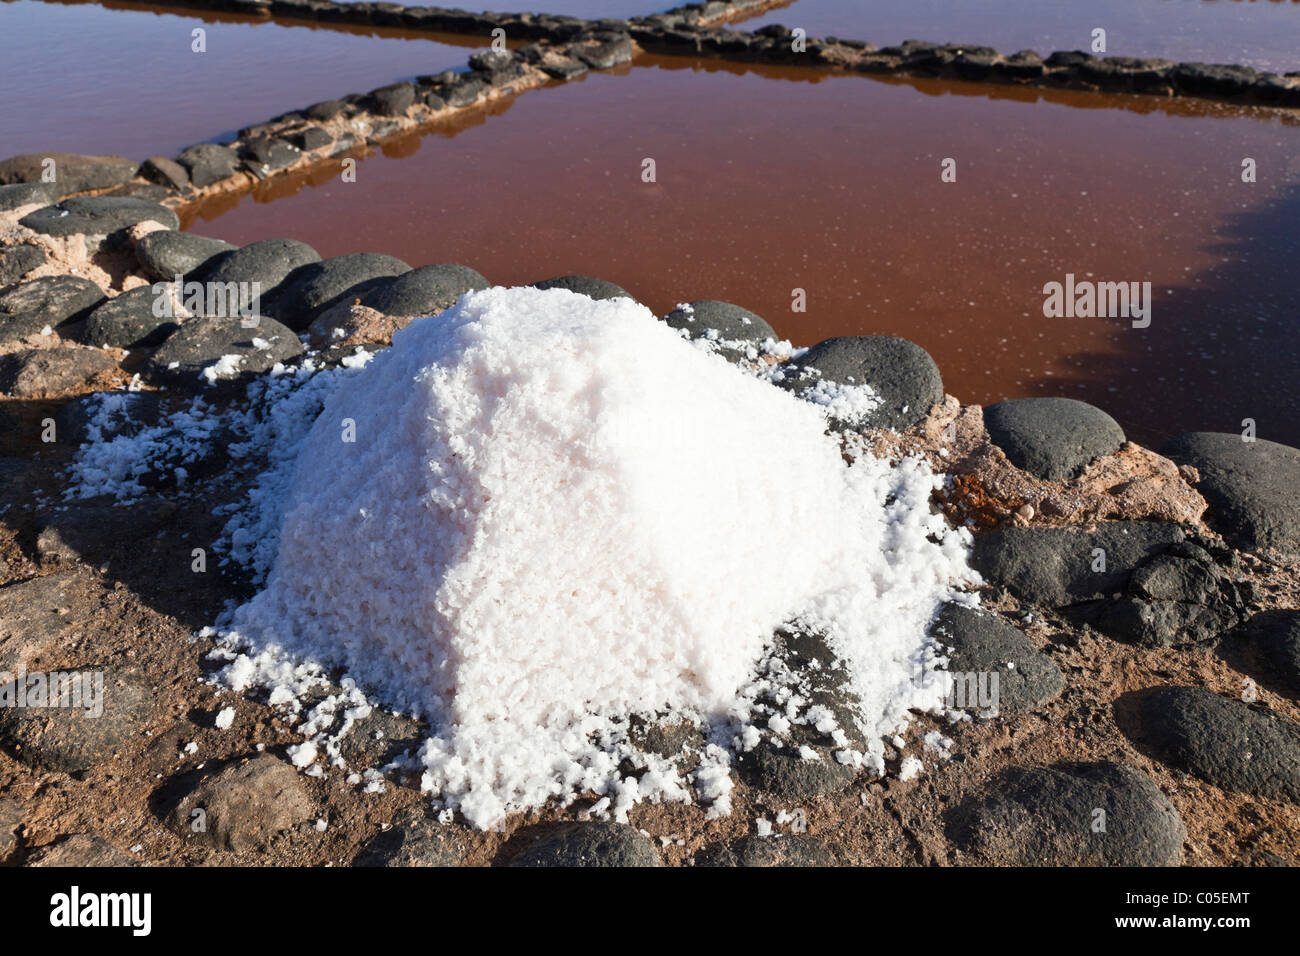 A pile of sun dried salt beside the evaporation pans at the Fuerteventura Salt Museum on the Canary Island of Fuerteventura Stock Photo